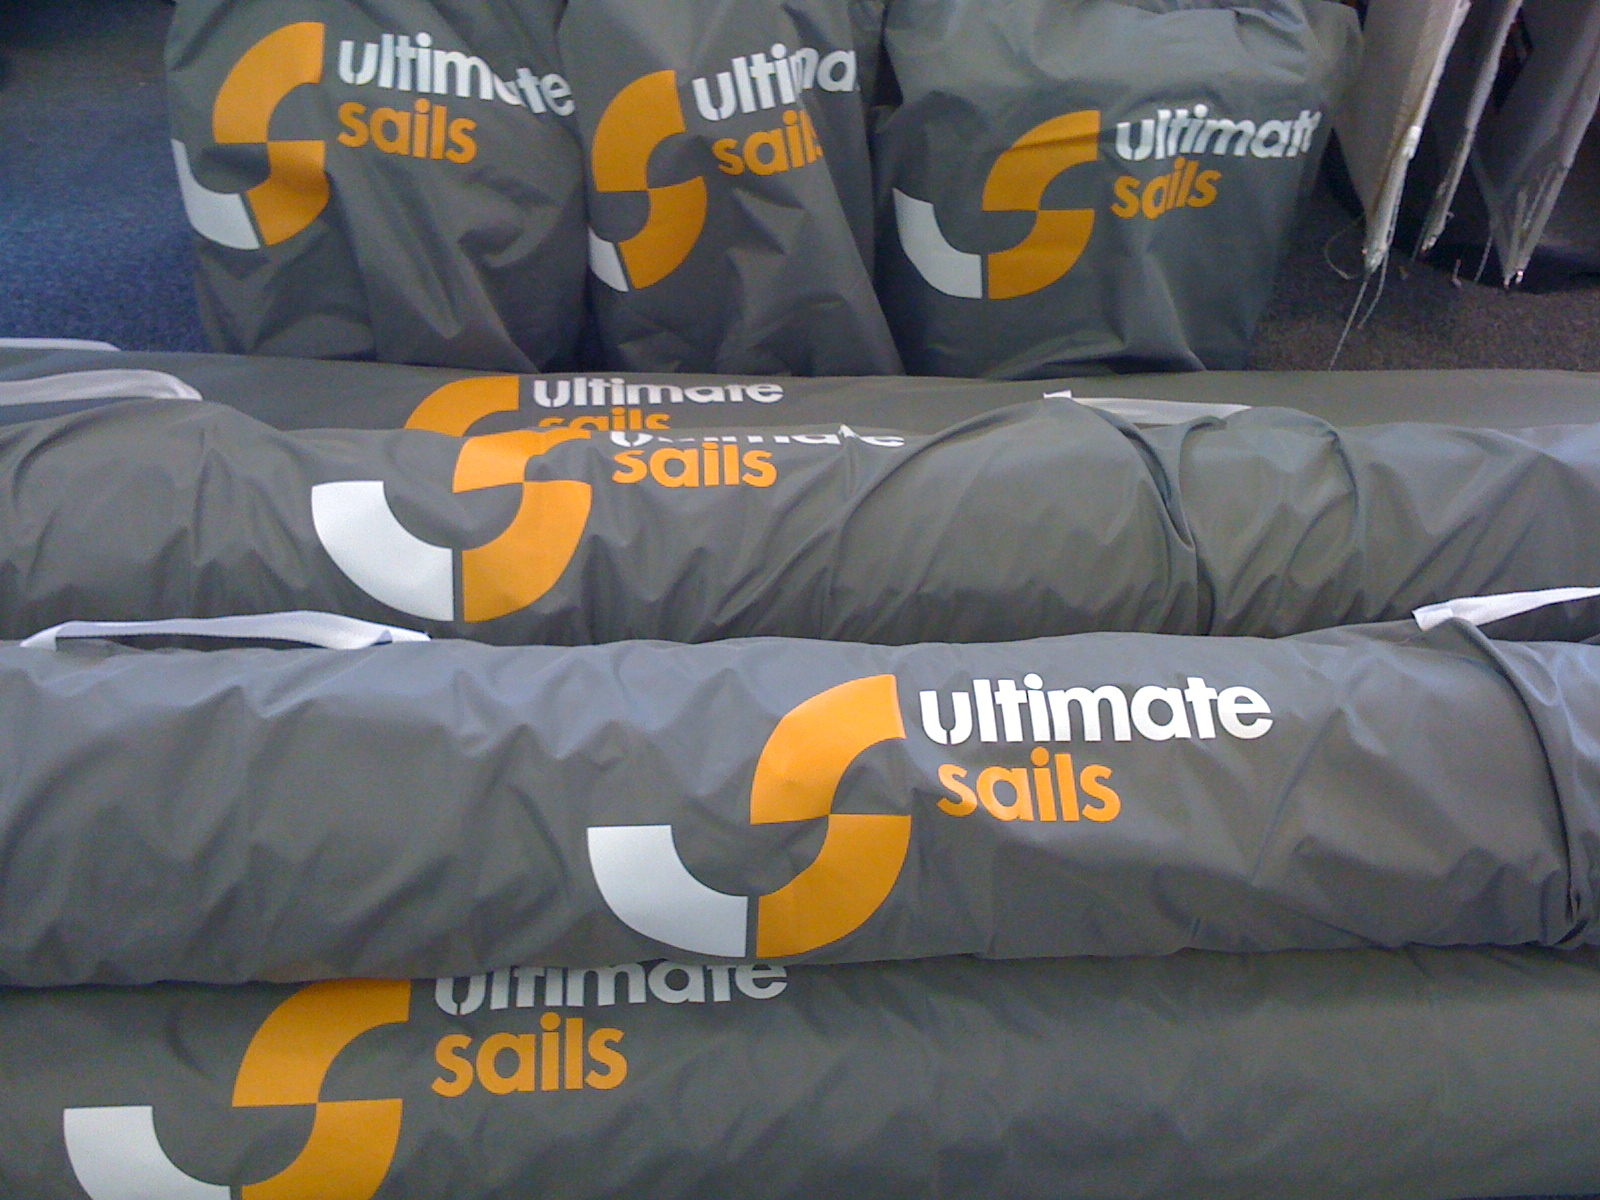 Ultimate Sails last minute offer